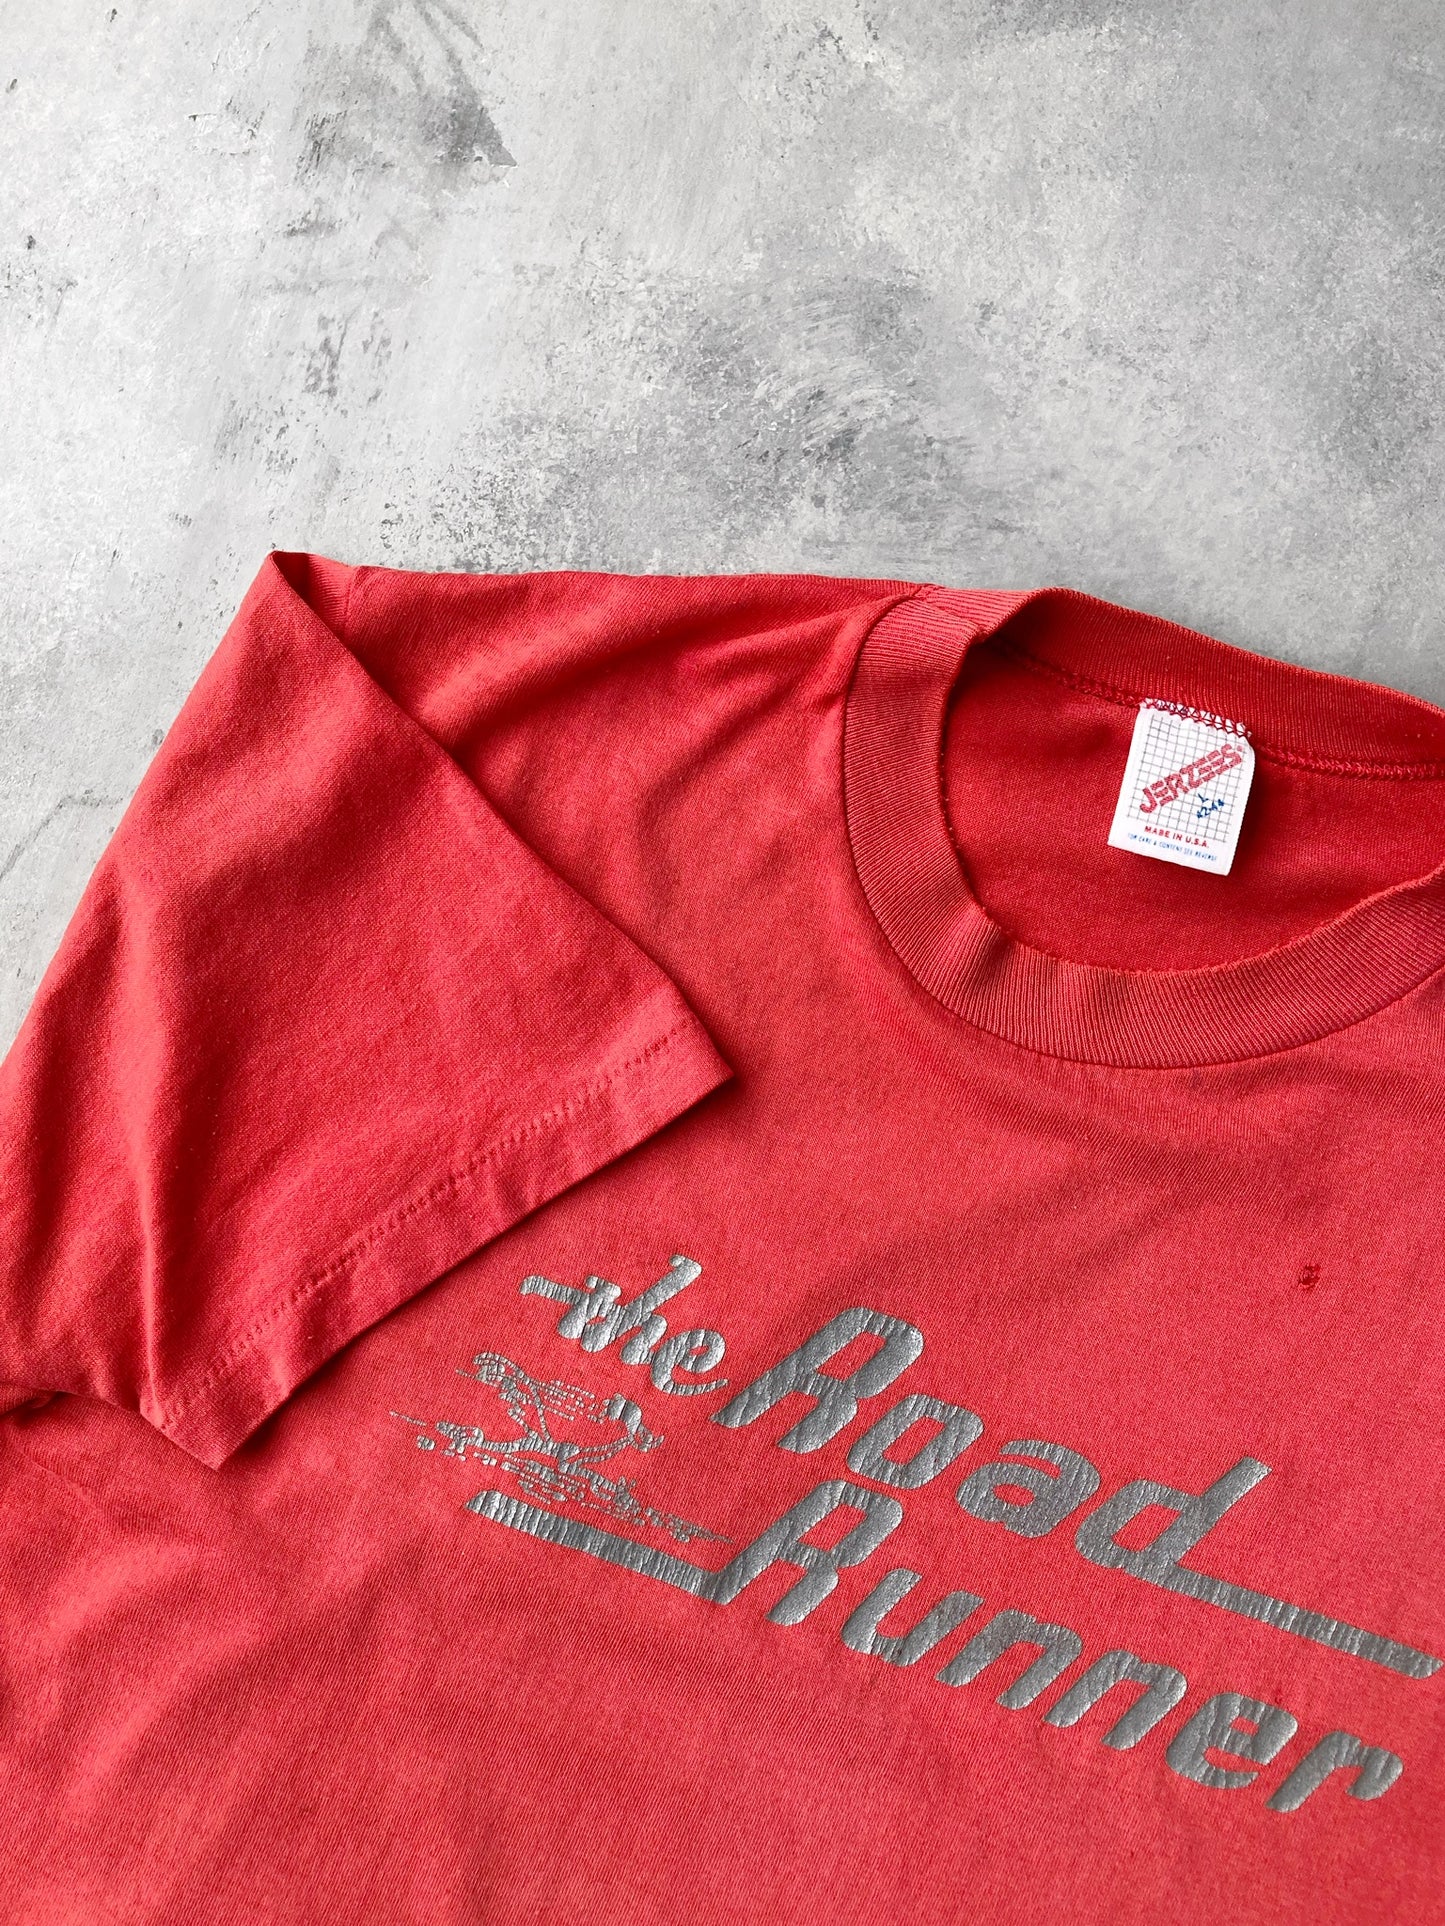 The Road Runner T-Shirt 80's - Medium / Large